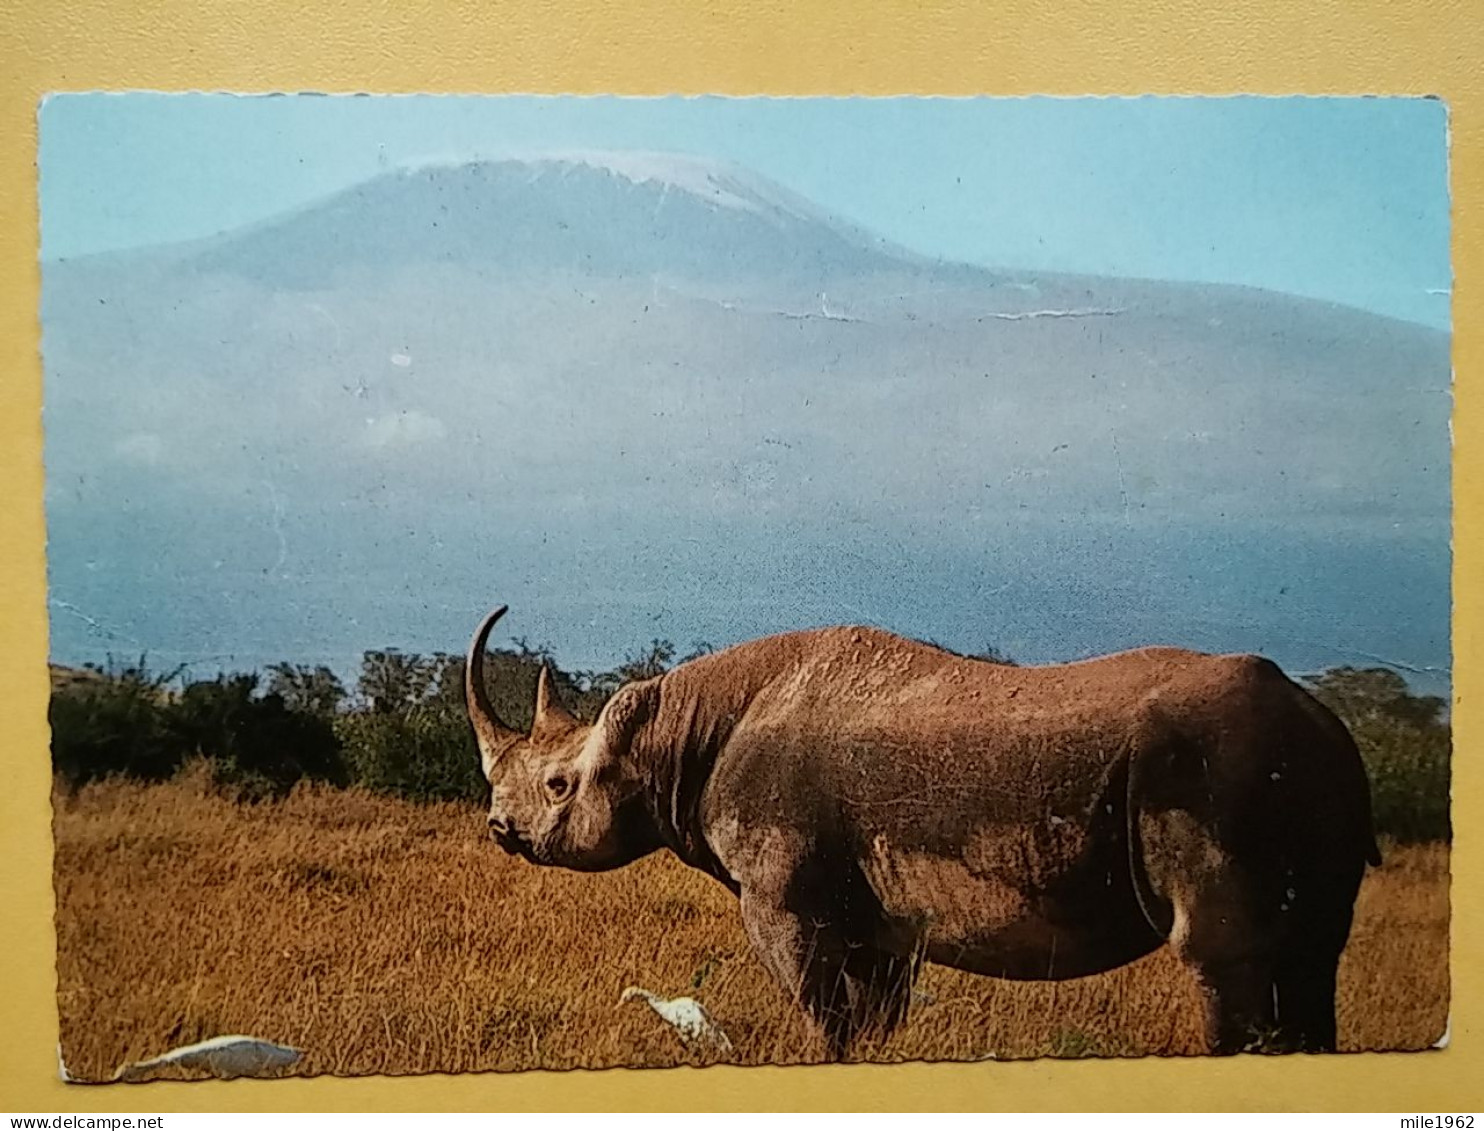 KOV 506-48 - RHINOCEROS, RHINO, AFRICA, KENYA, KILIMANJARO - Rhinoceros